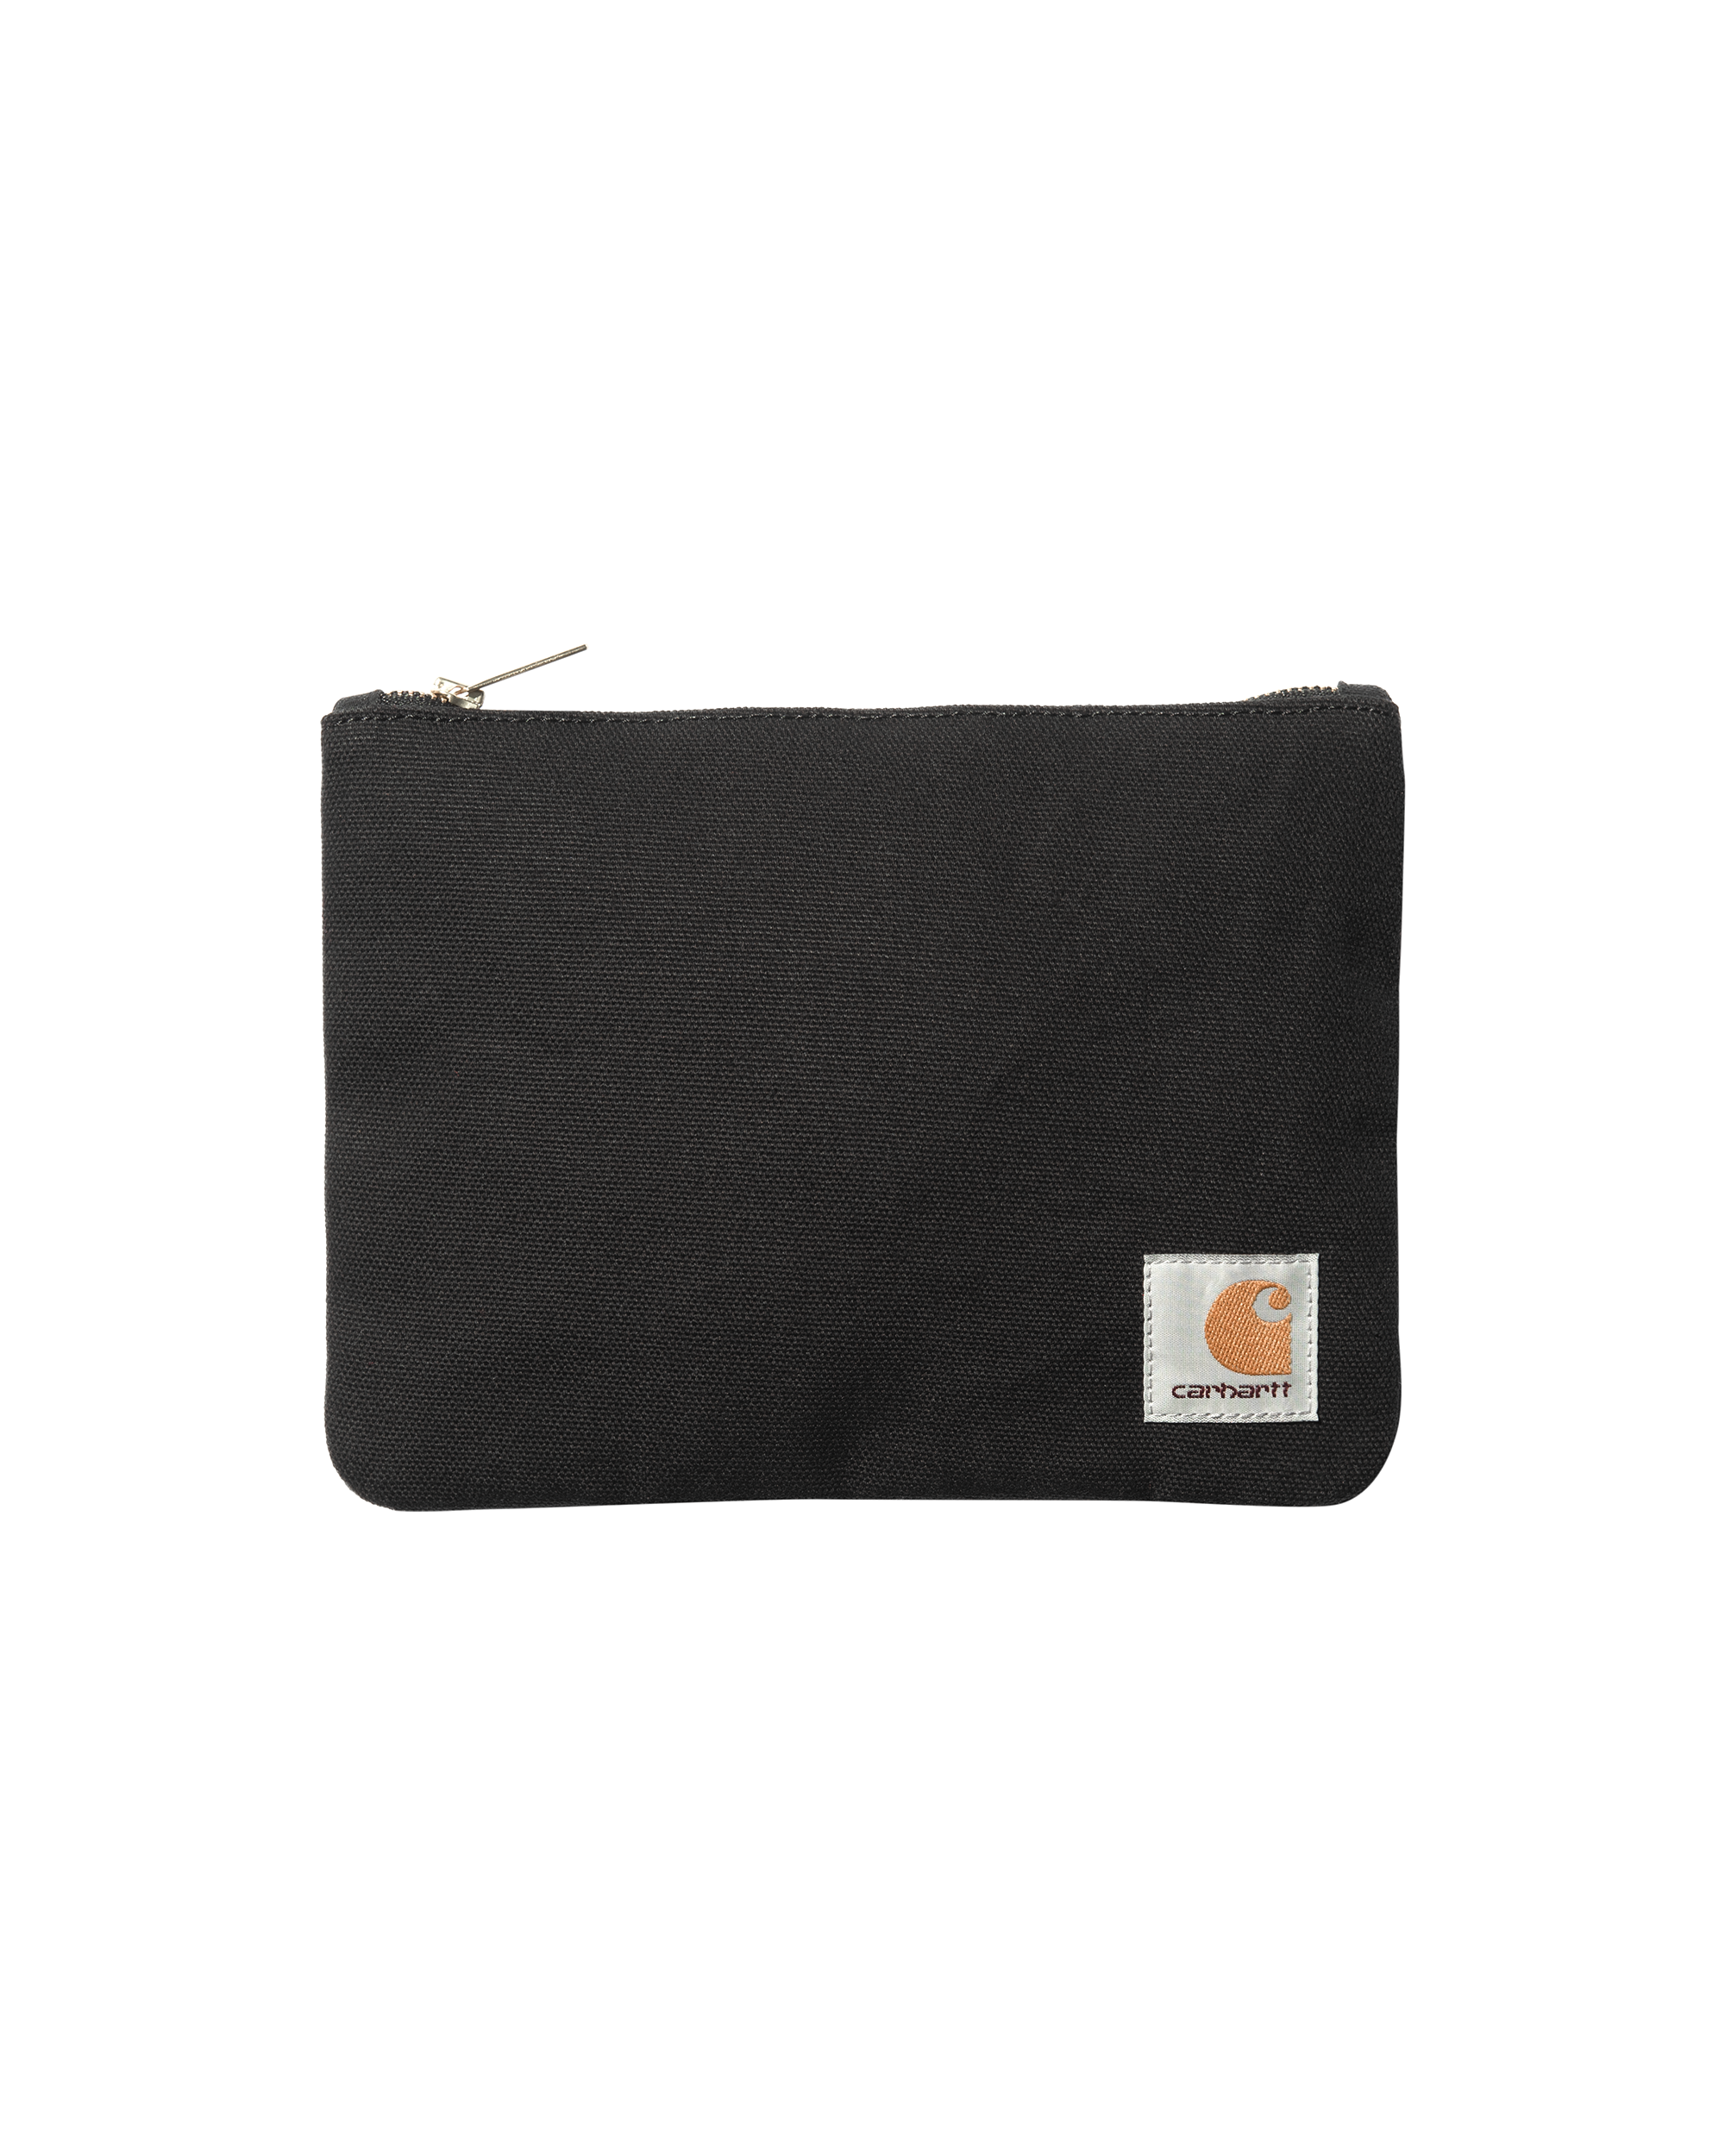 Oregon Zip Wallet - Starco Stripe / Black